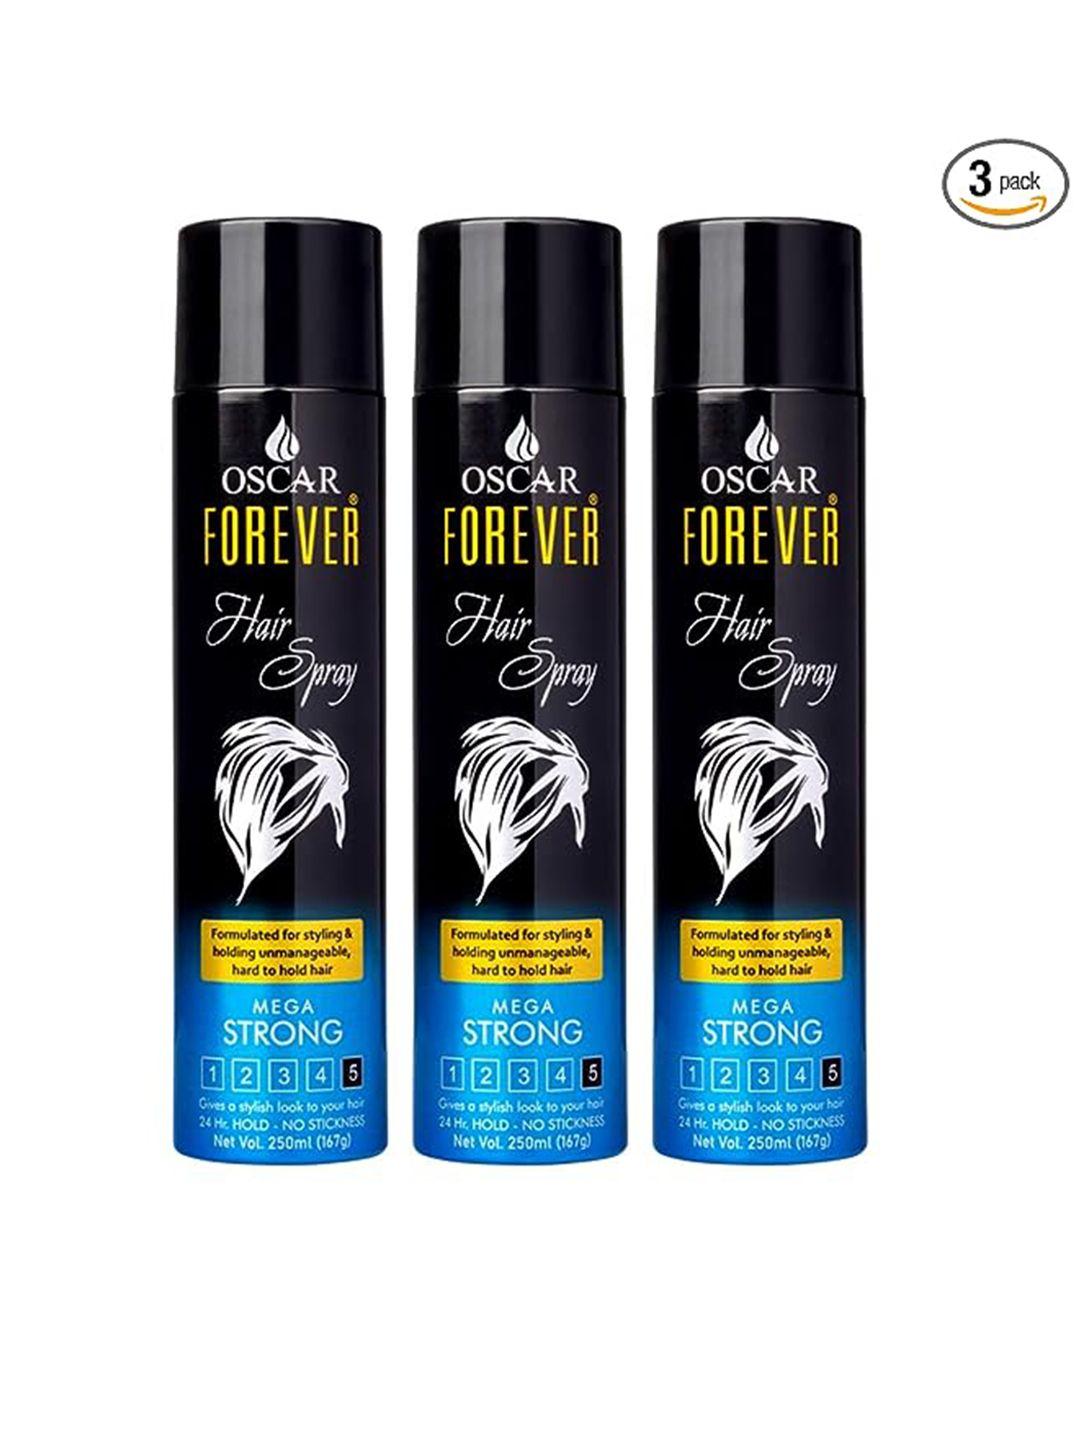 oscar forever set of 3 hair sprays for hair styling - 250ml each